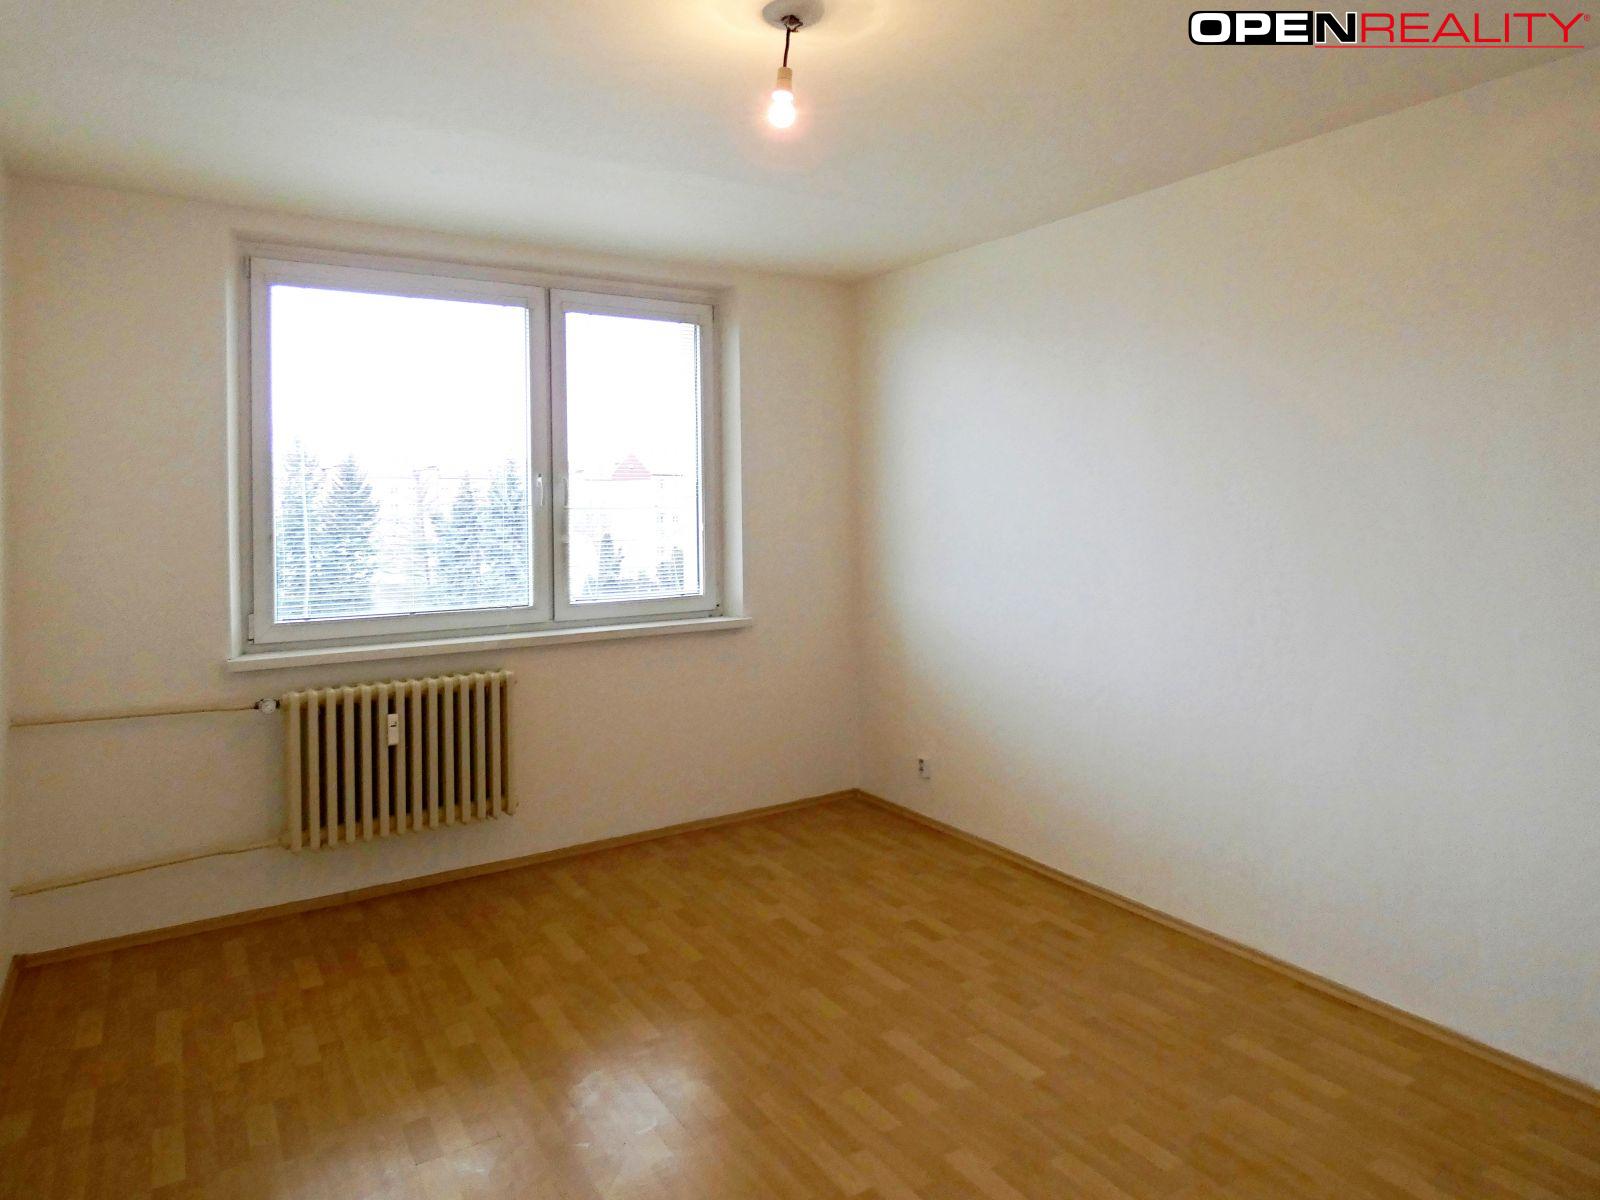 Pronájem bytu 2+1, 56m2, ul. Ručilova, Olomouc